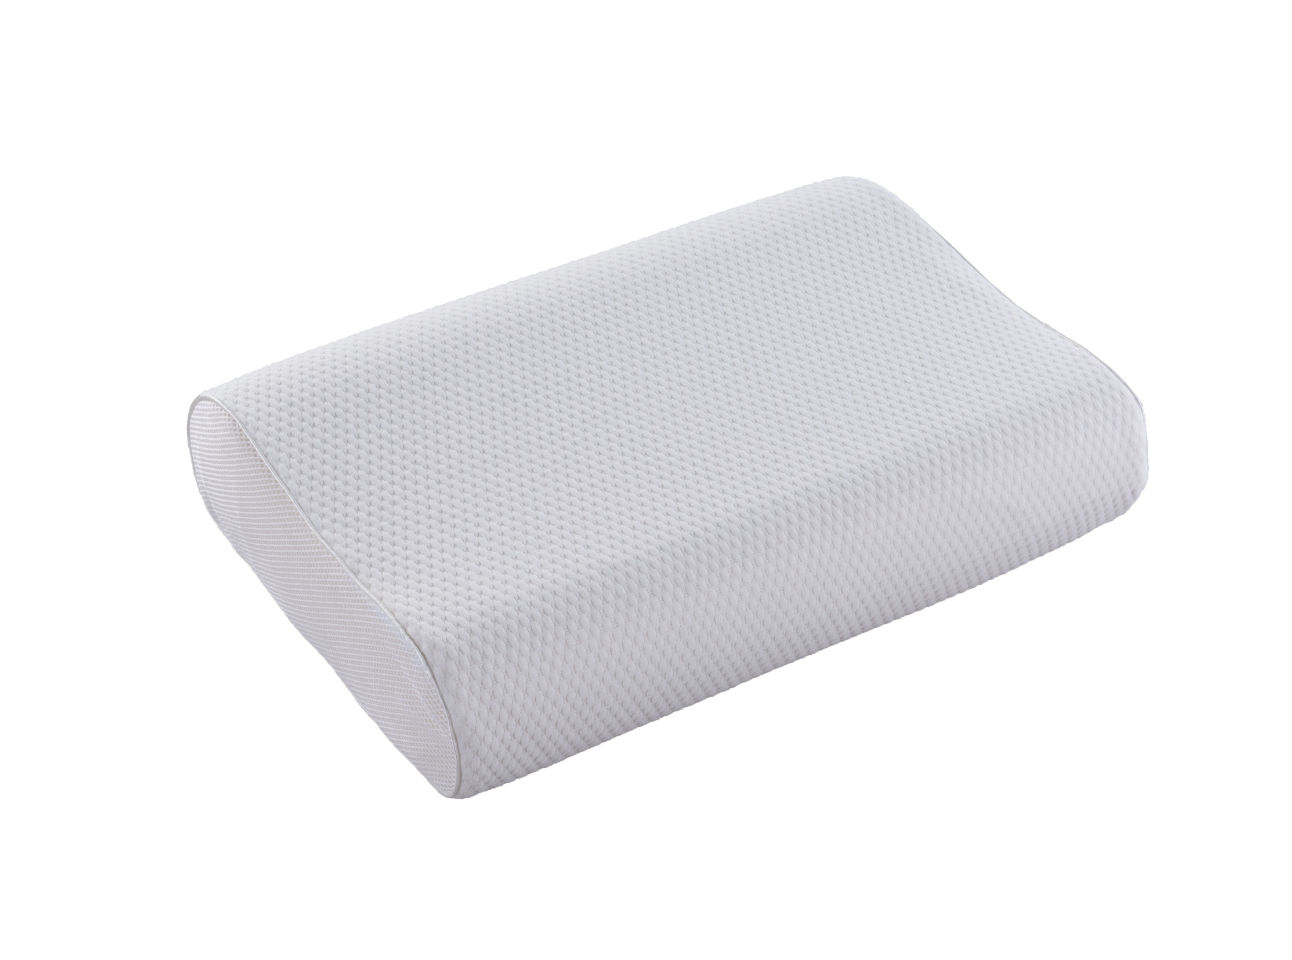 Pillow Neck Support Cushion Orthopedic Neck Pillow Memory Foam Pillow DHL 